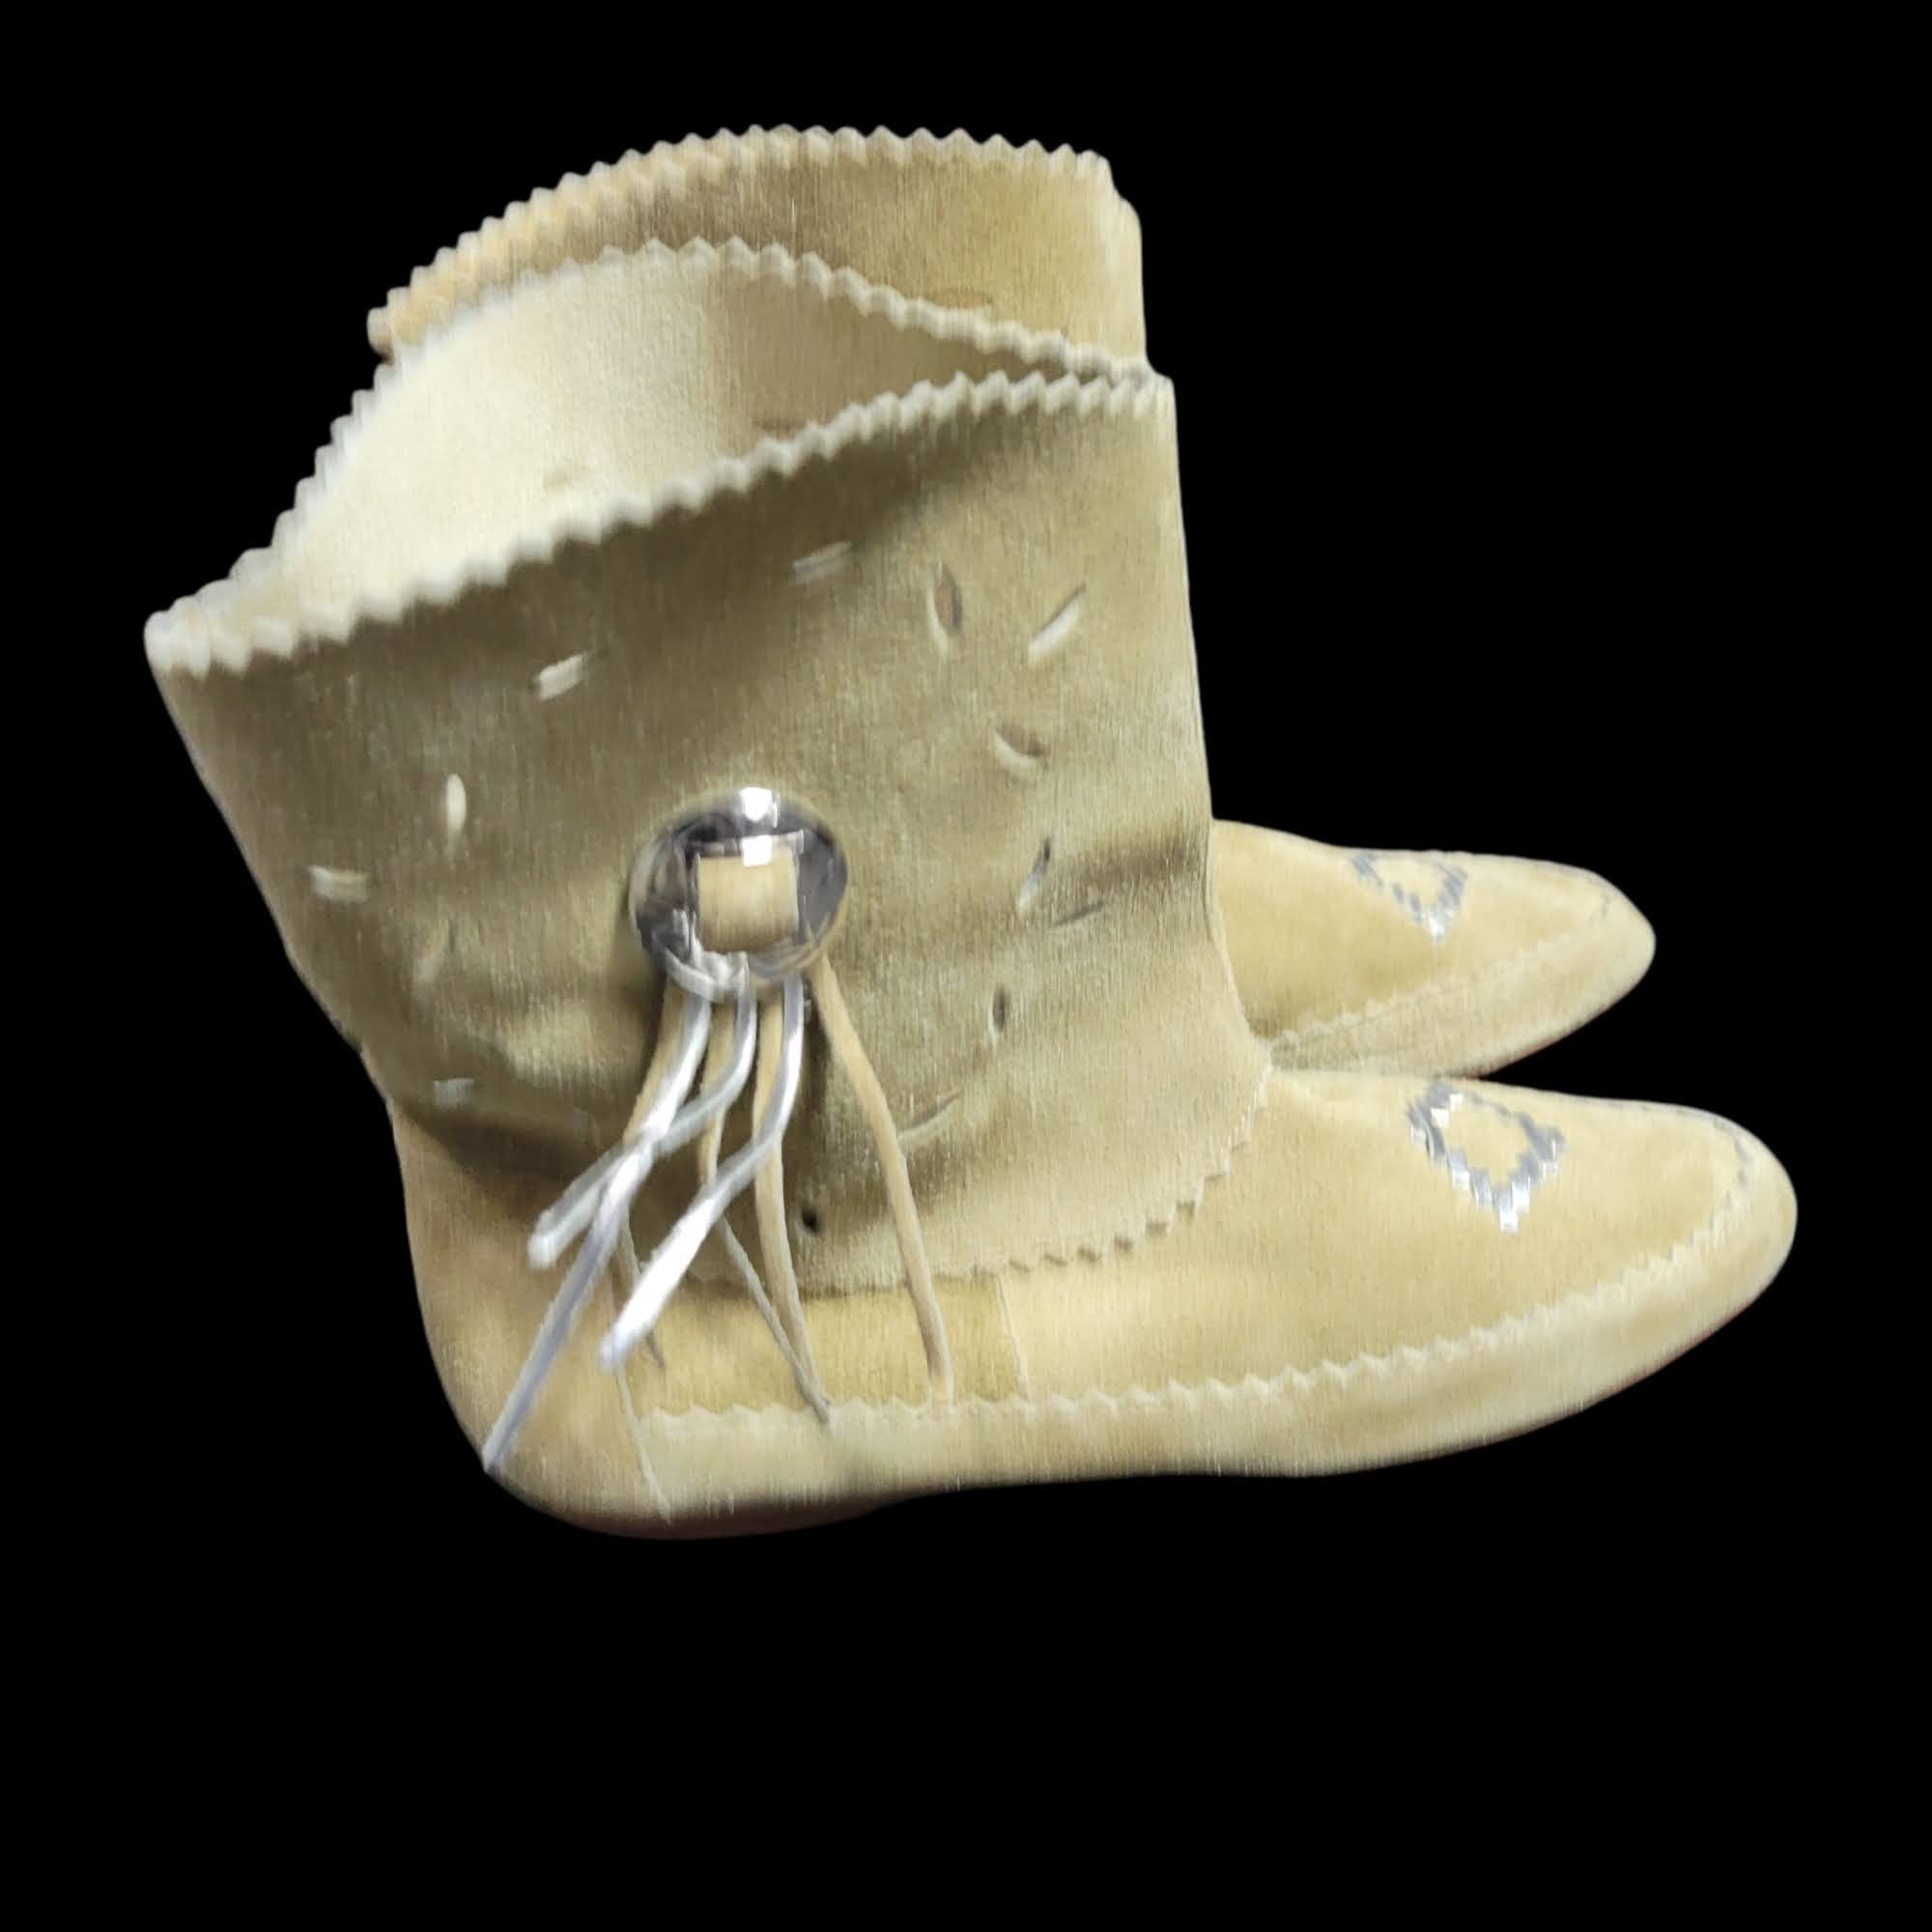 Vintage Westies TeePee Boots Size 8.5 Narrow